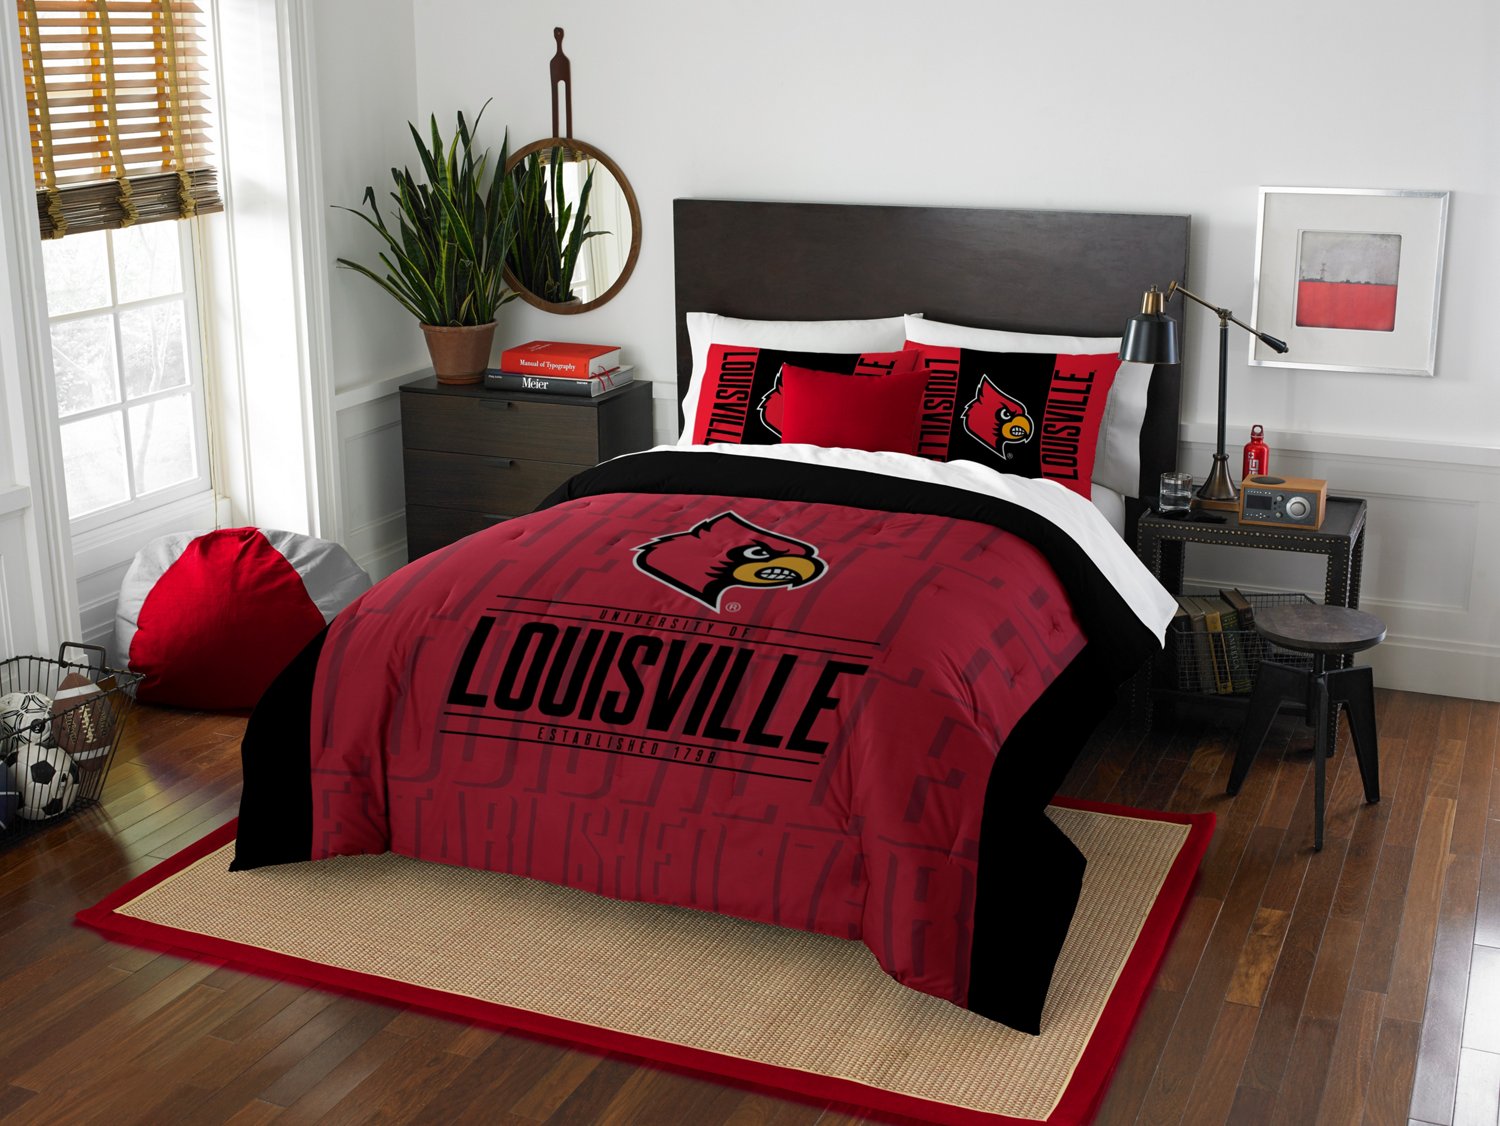 NCAA University of Louisville Queen Bedding Set by The Northwest